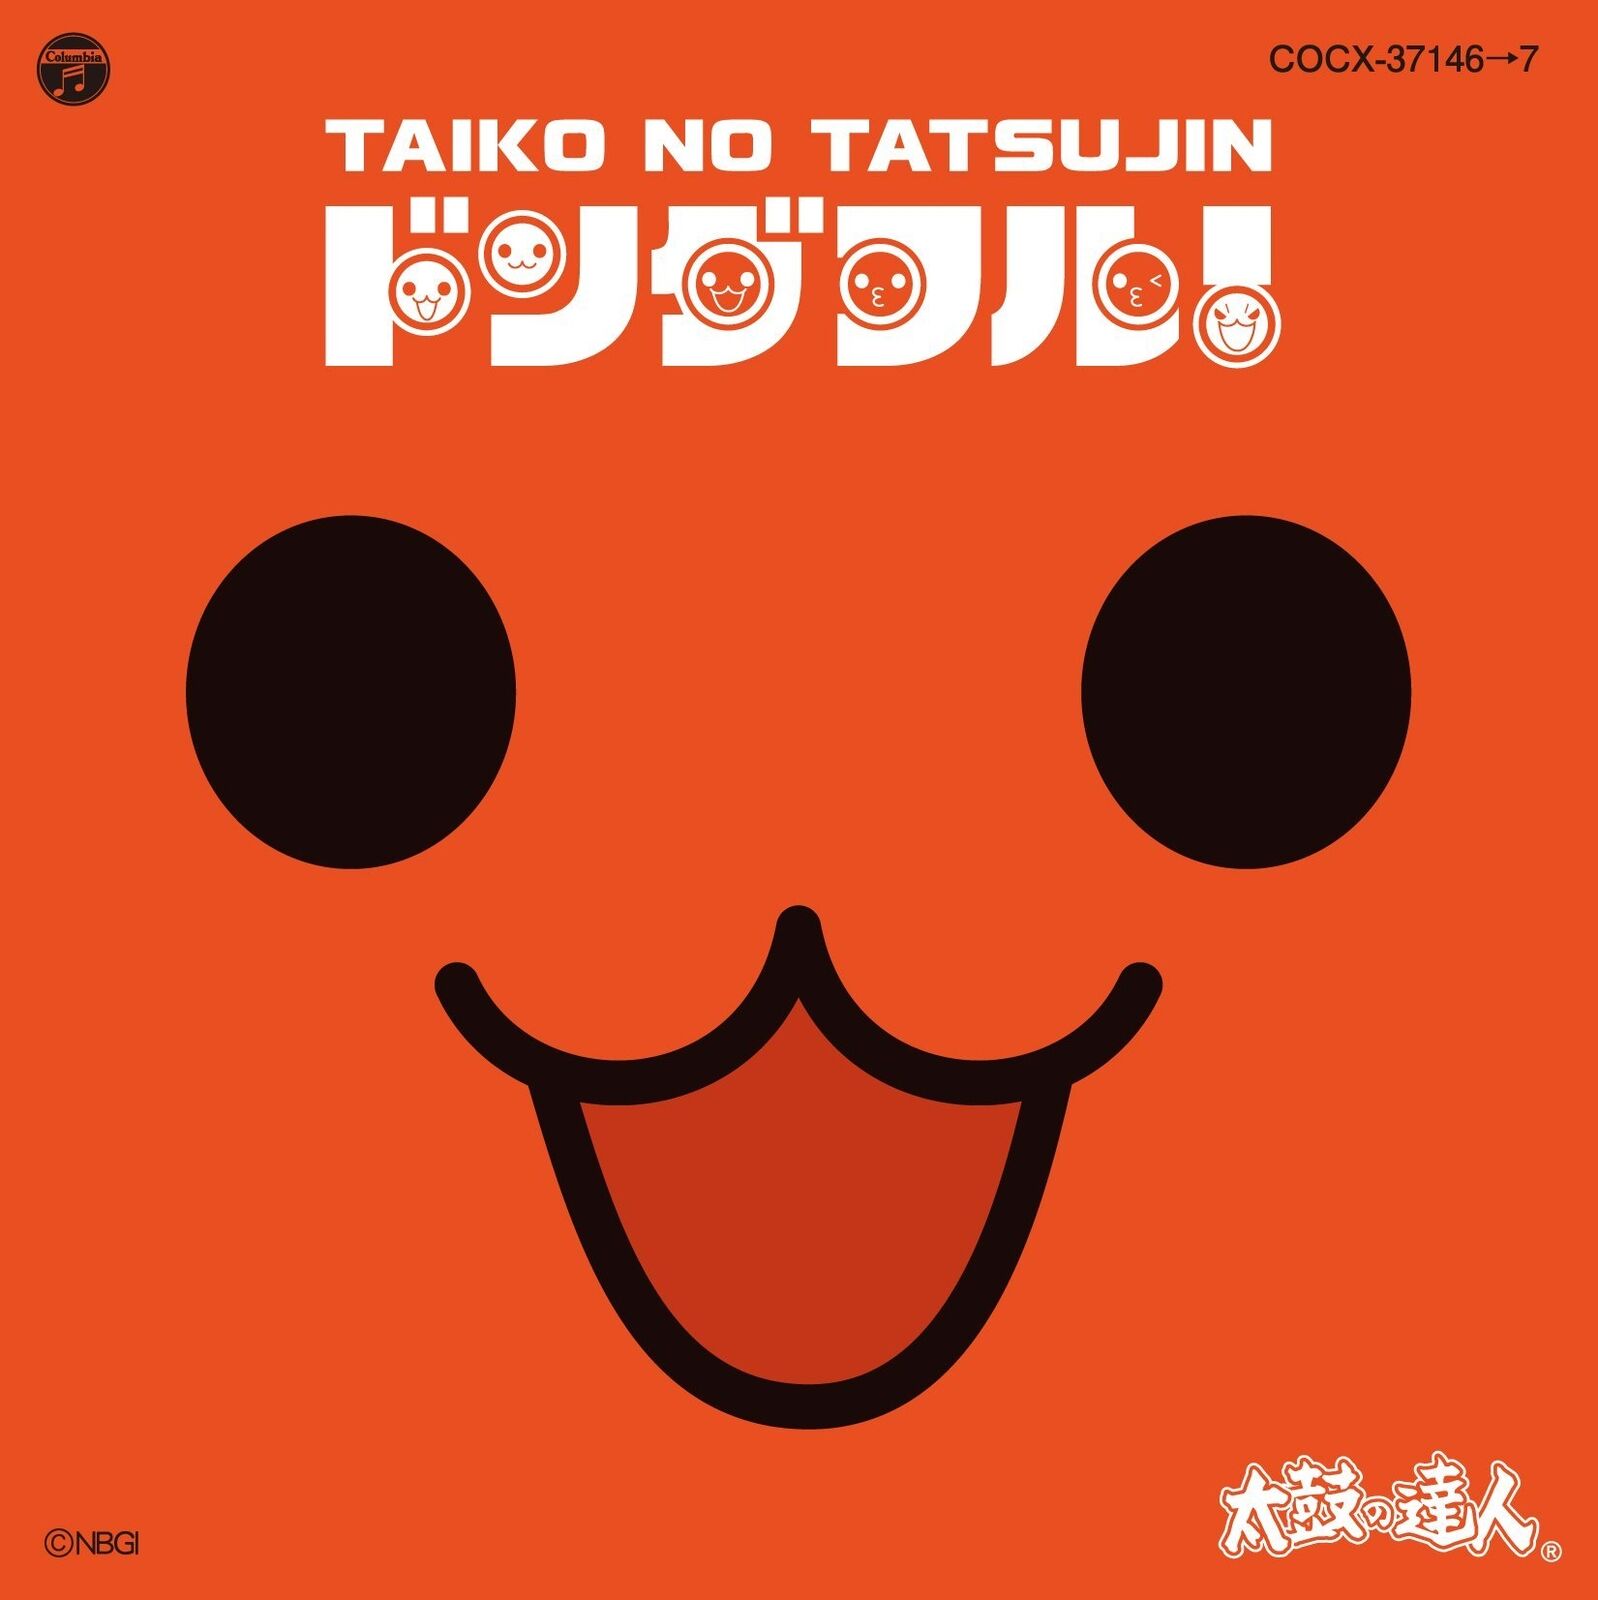 [CD] Taiko no Tatsujin Original Soundtrack Dondaful COCX-37146 Game Music NEW